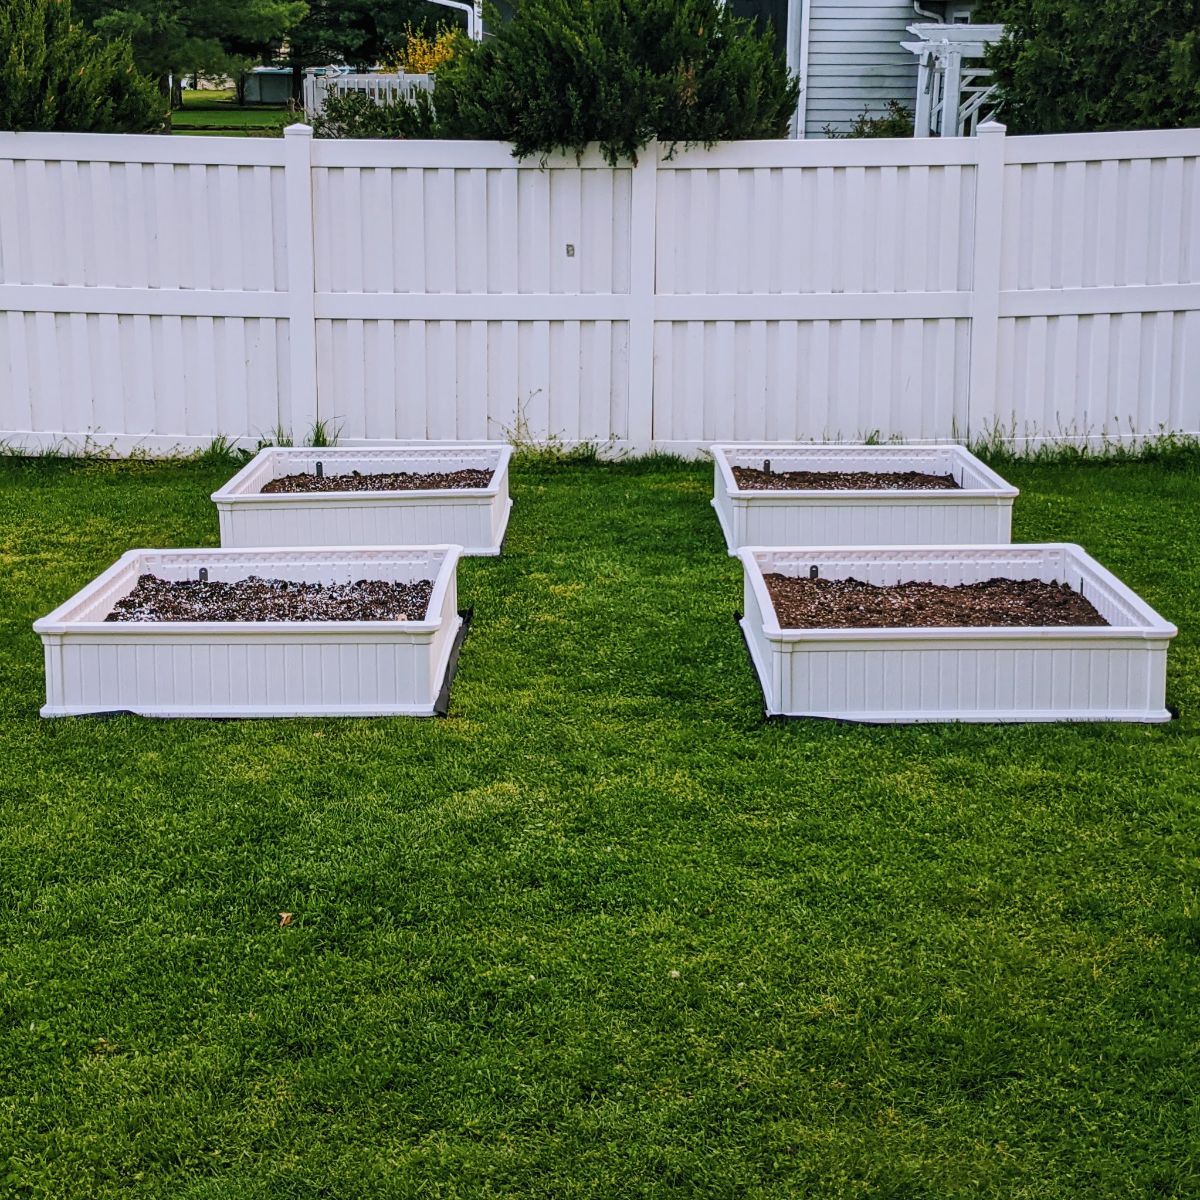 Installing raised garden beds by Giantex - white HDPE garden boxes